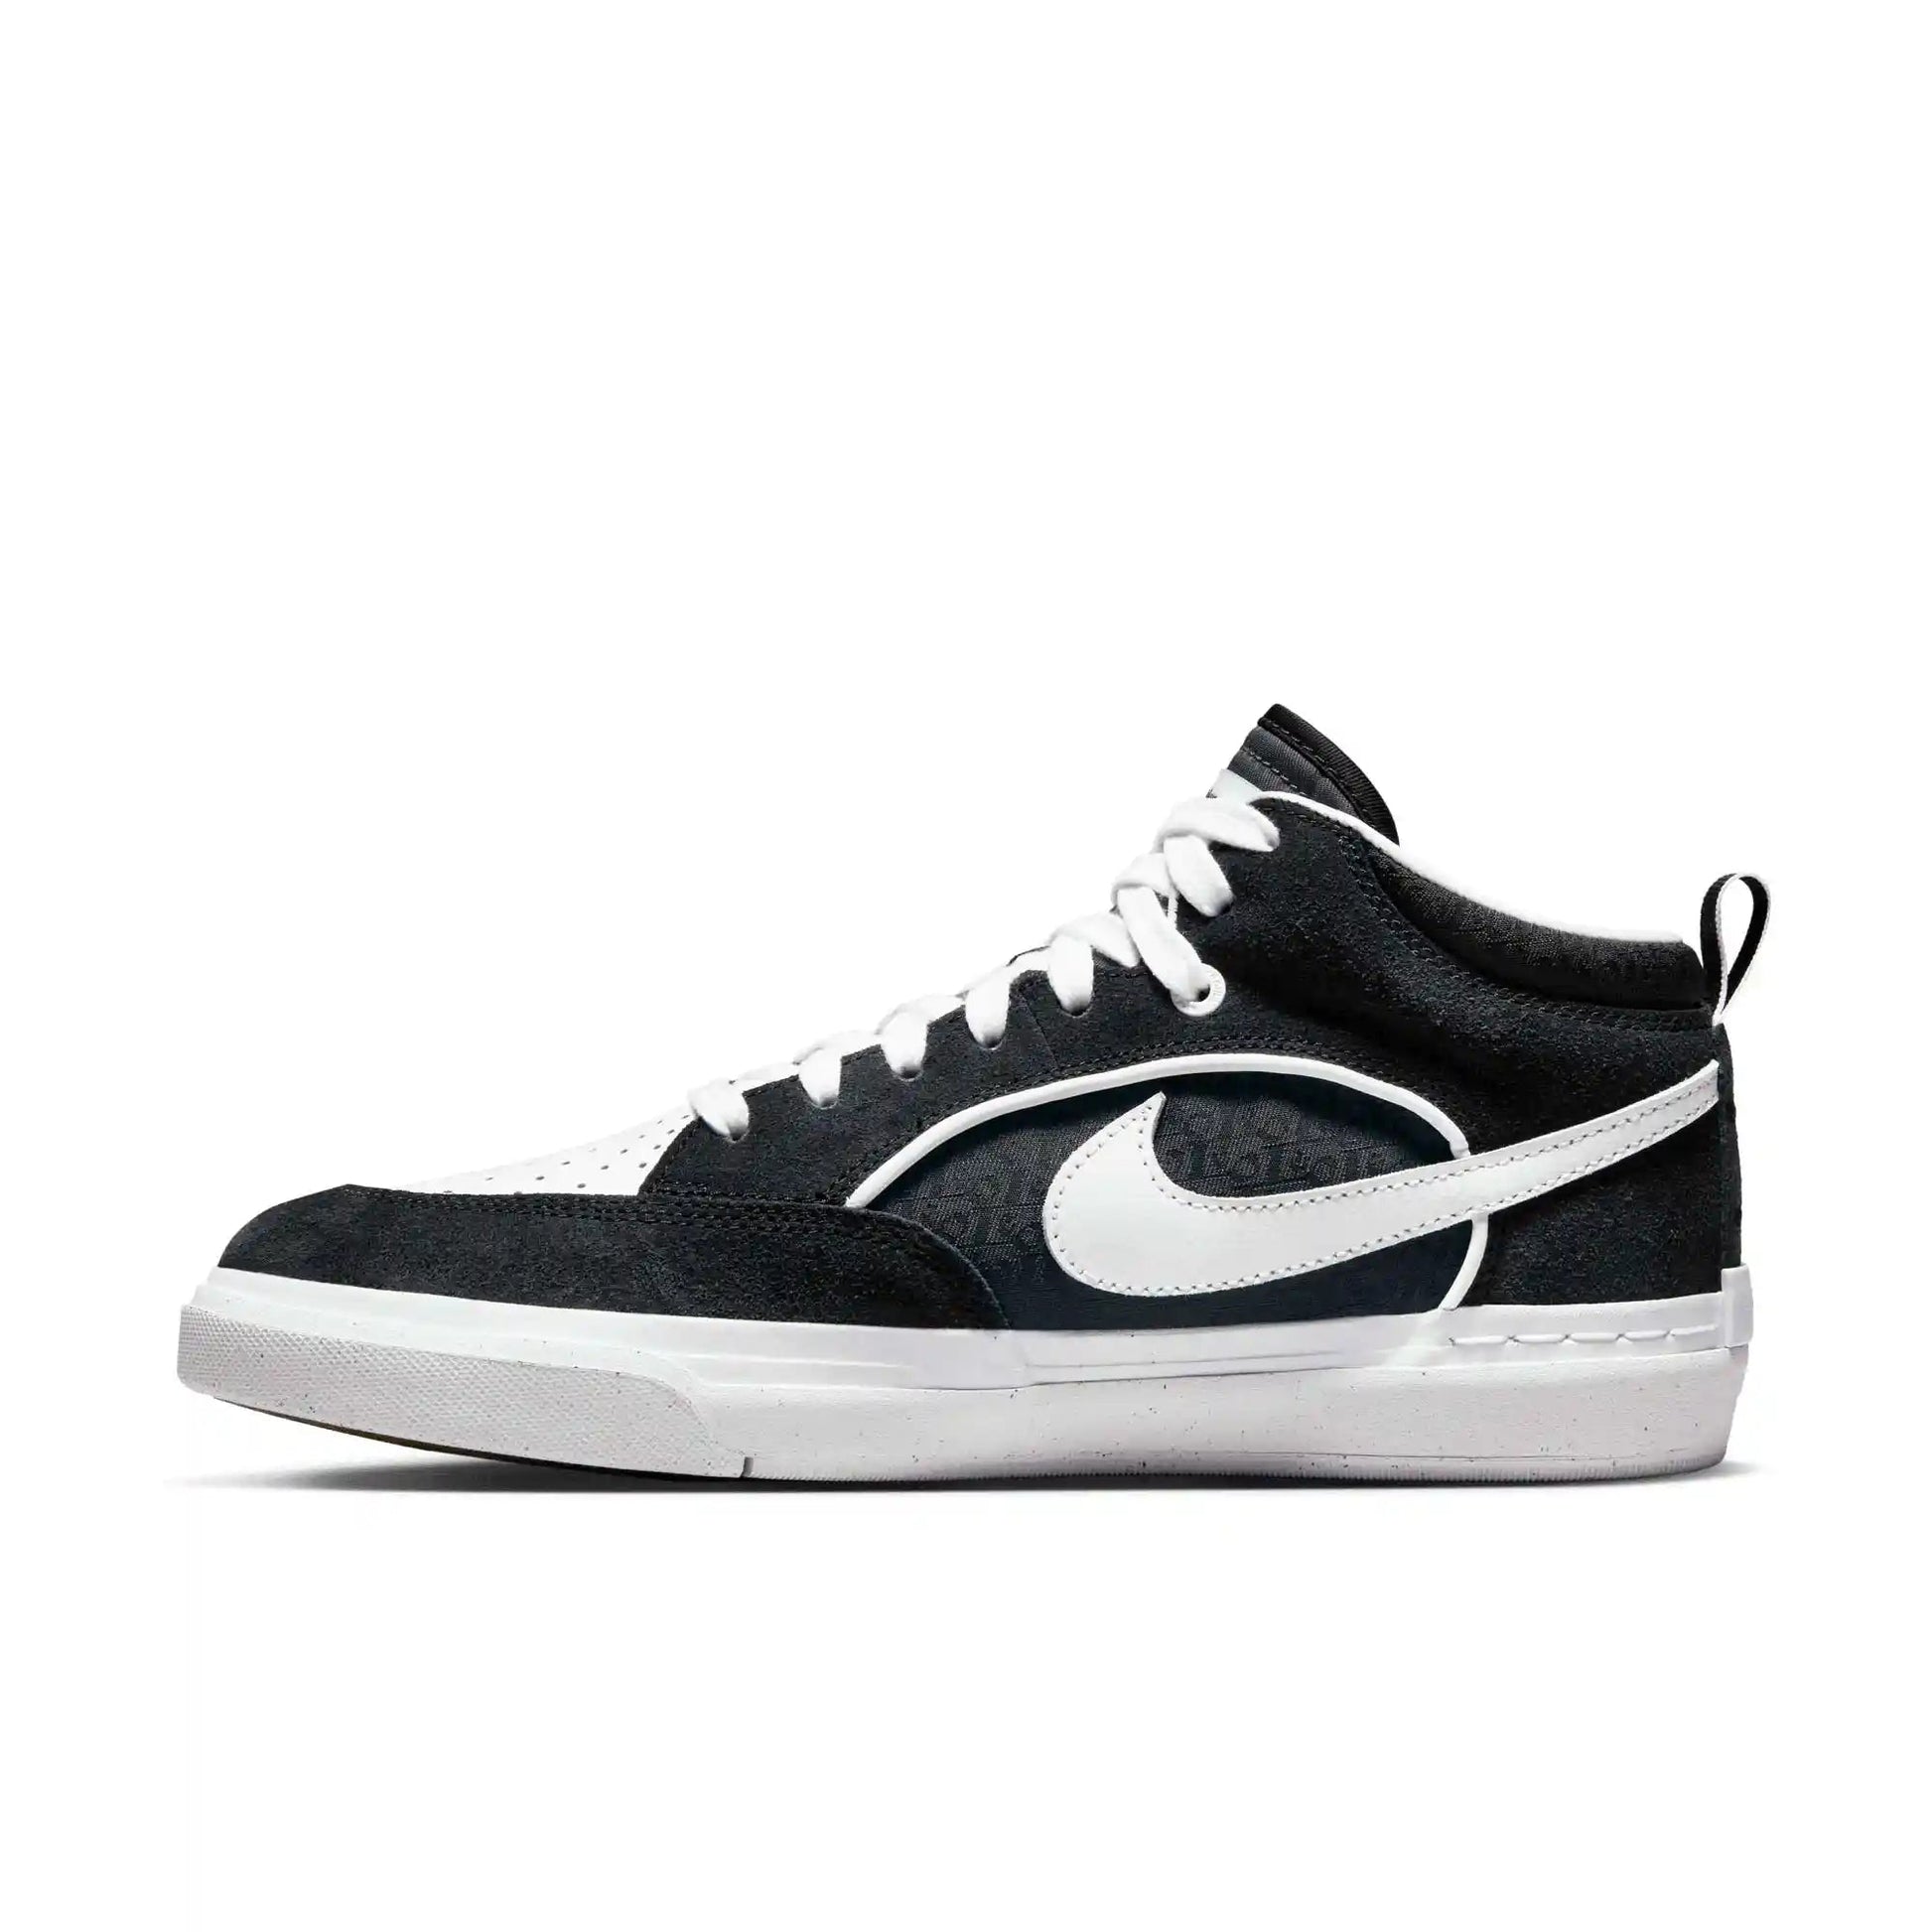 Nike SB React Leo, black/white-black-gum light brown - Tiki Room Skateboards - 9